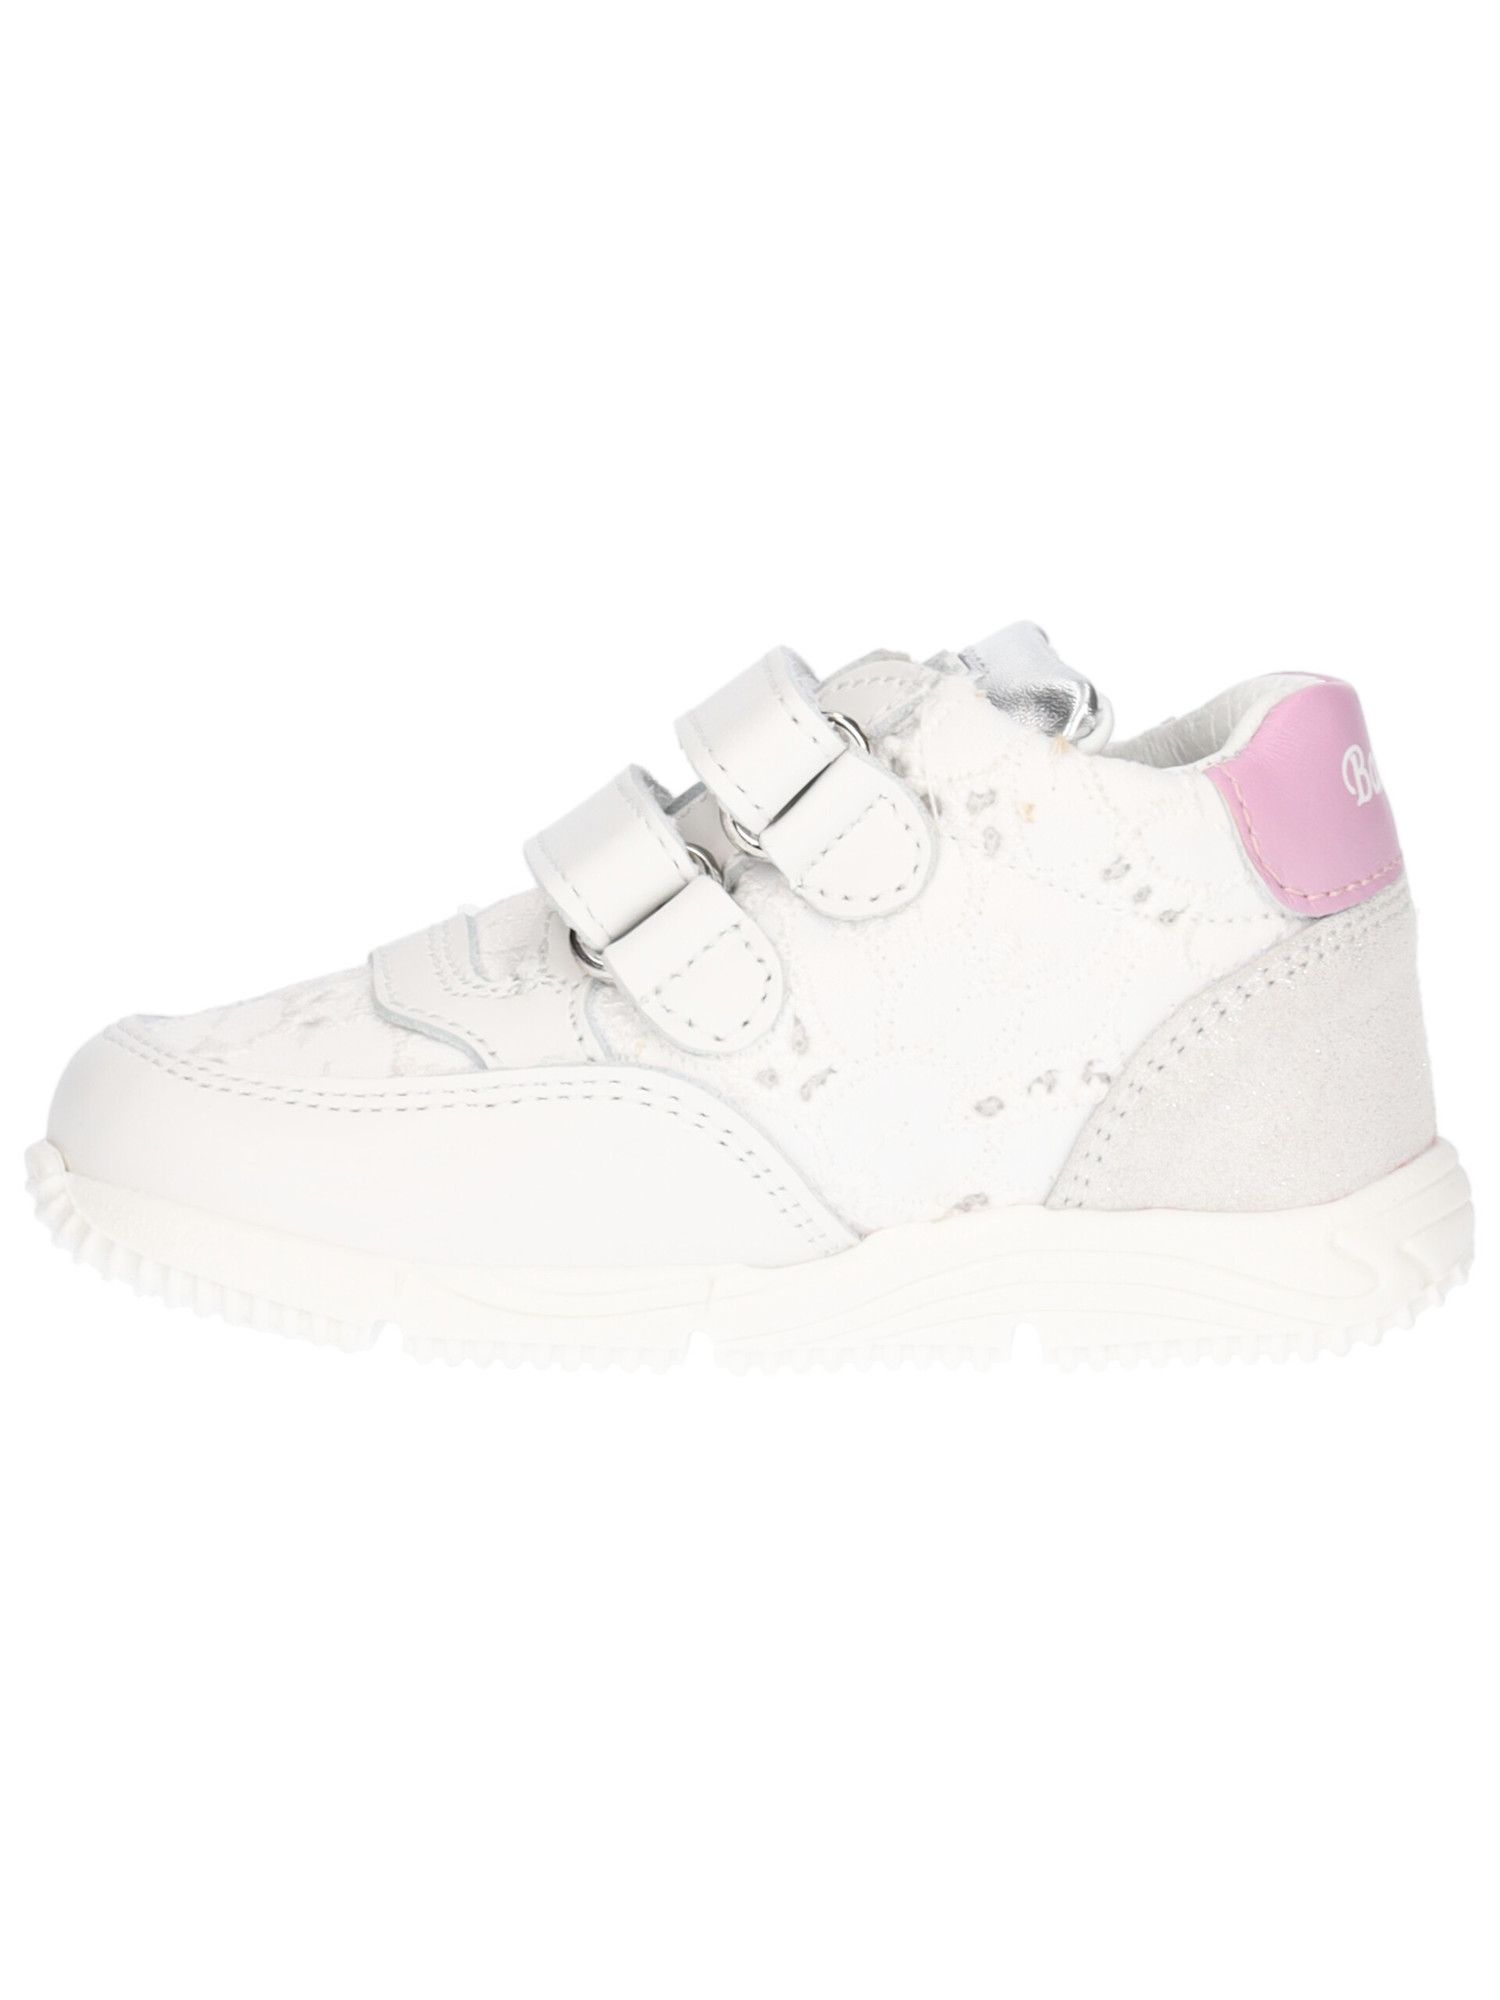 sneaker-balducci-primi-passi-bambina-bianca-5fae47